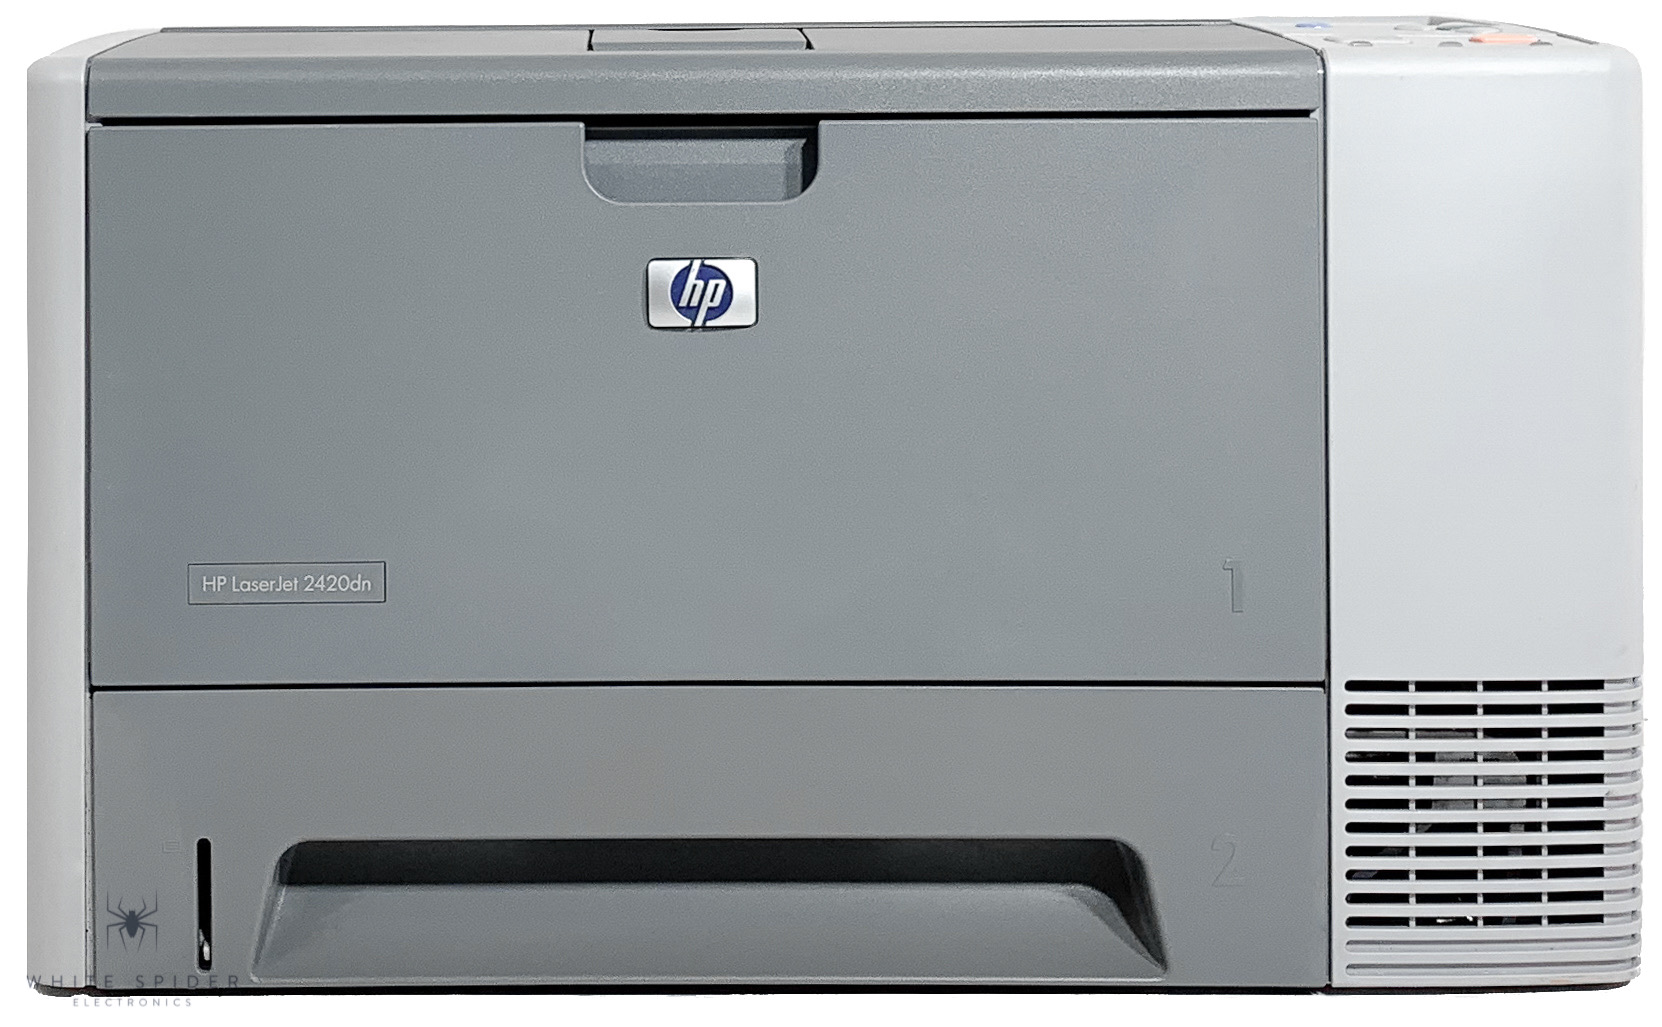 HP LaserJet 2420dn Workgroup Laser Printer